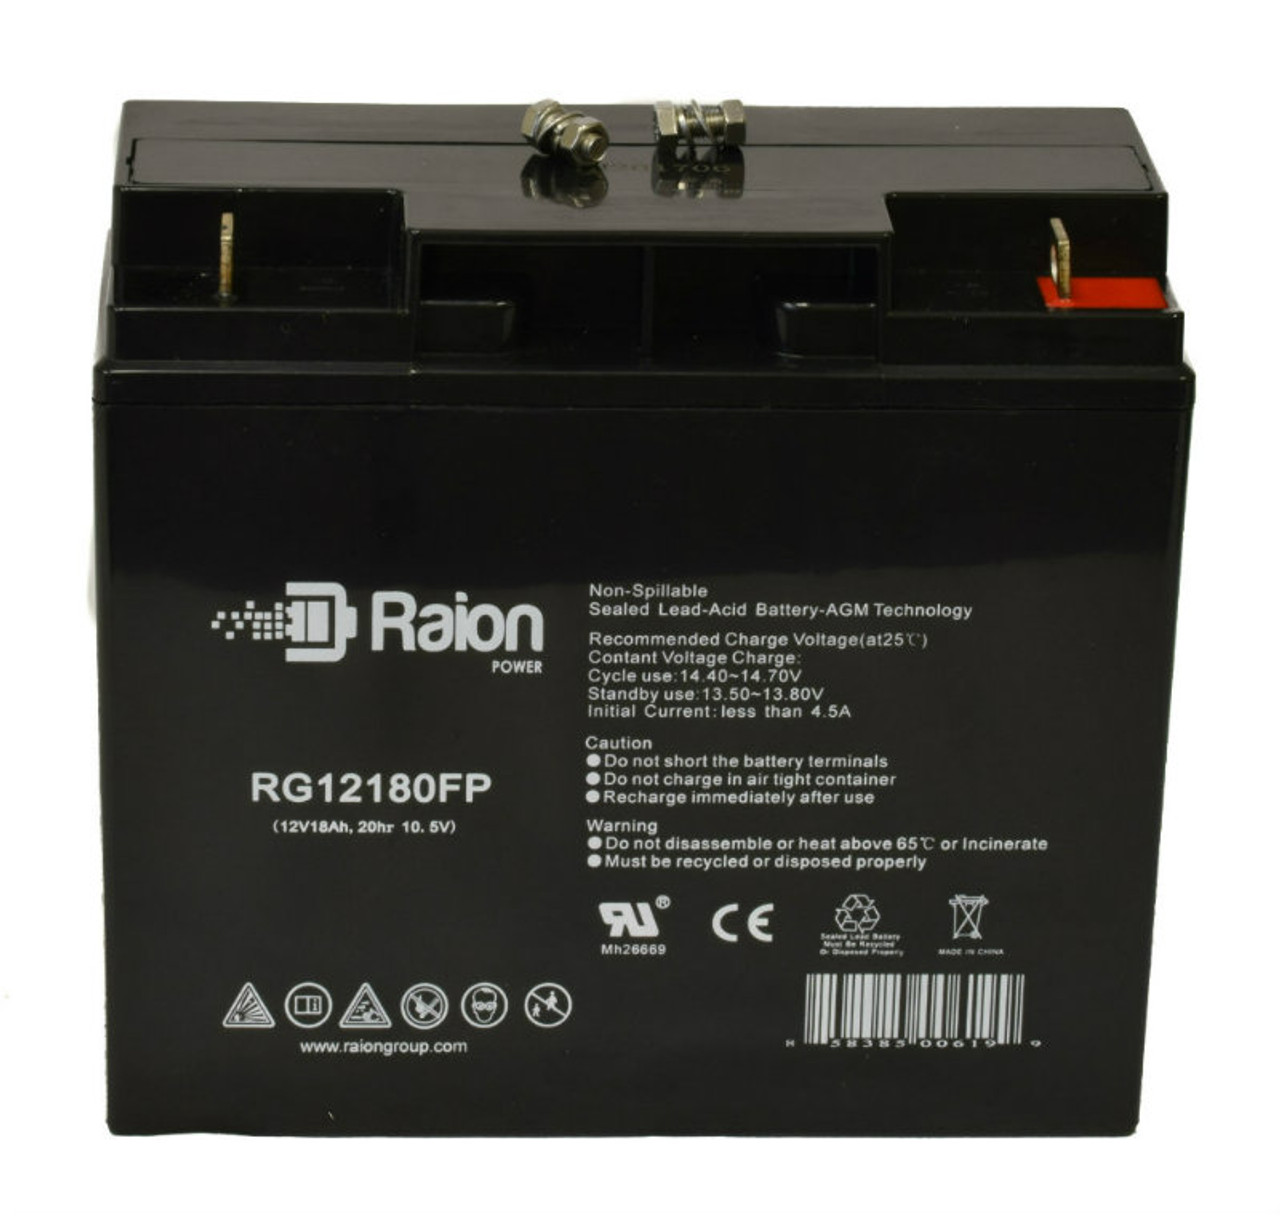 Raion Power RG12180FP 12V 18Ah Lead Acid Battery for VCELL 12VC18